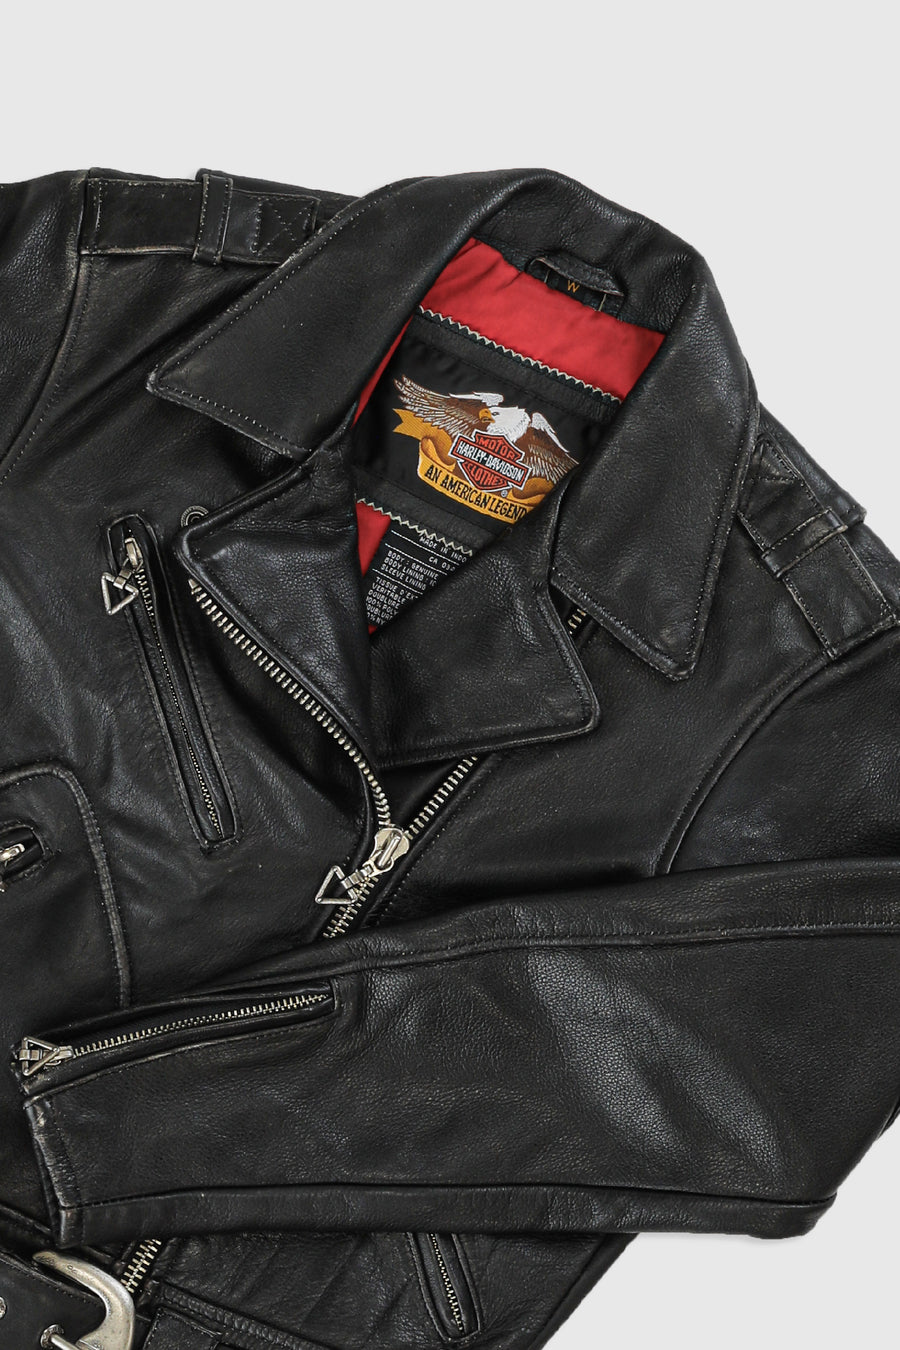 Vintage Harley Leather Jacket